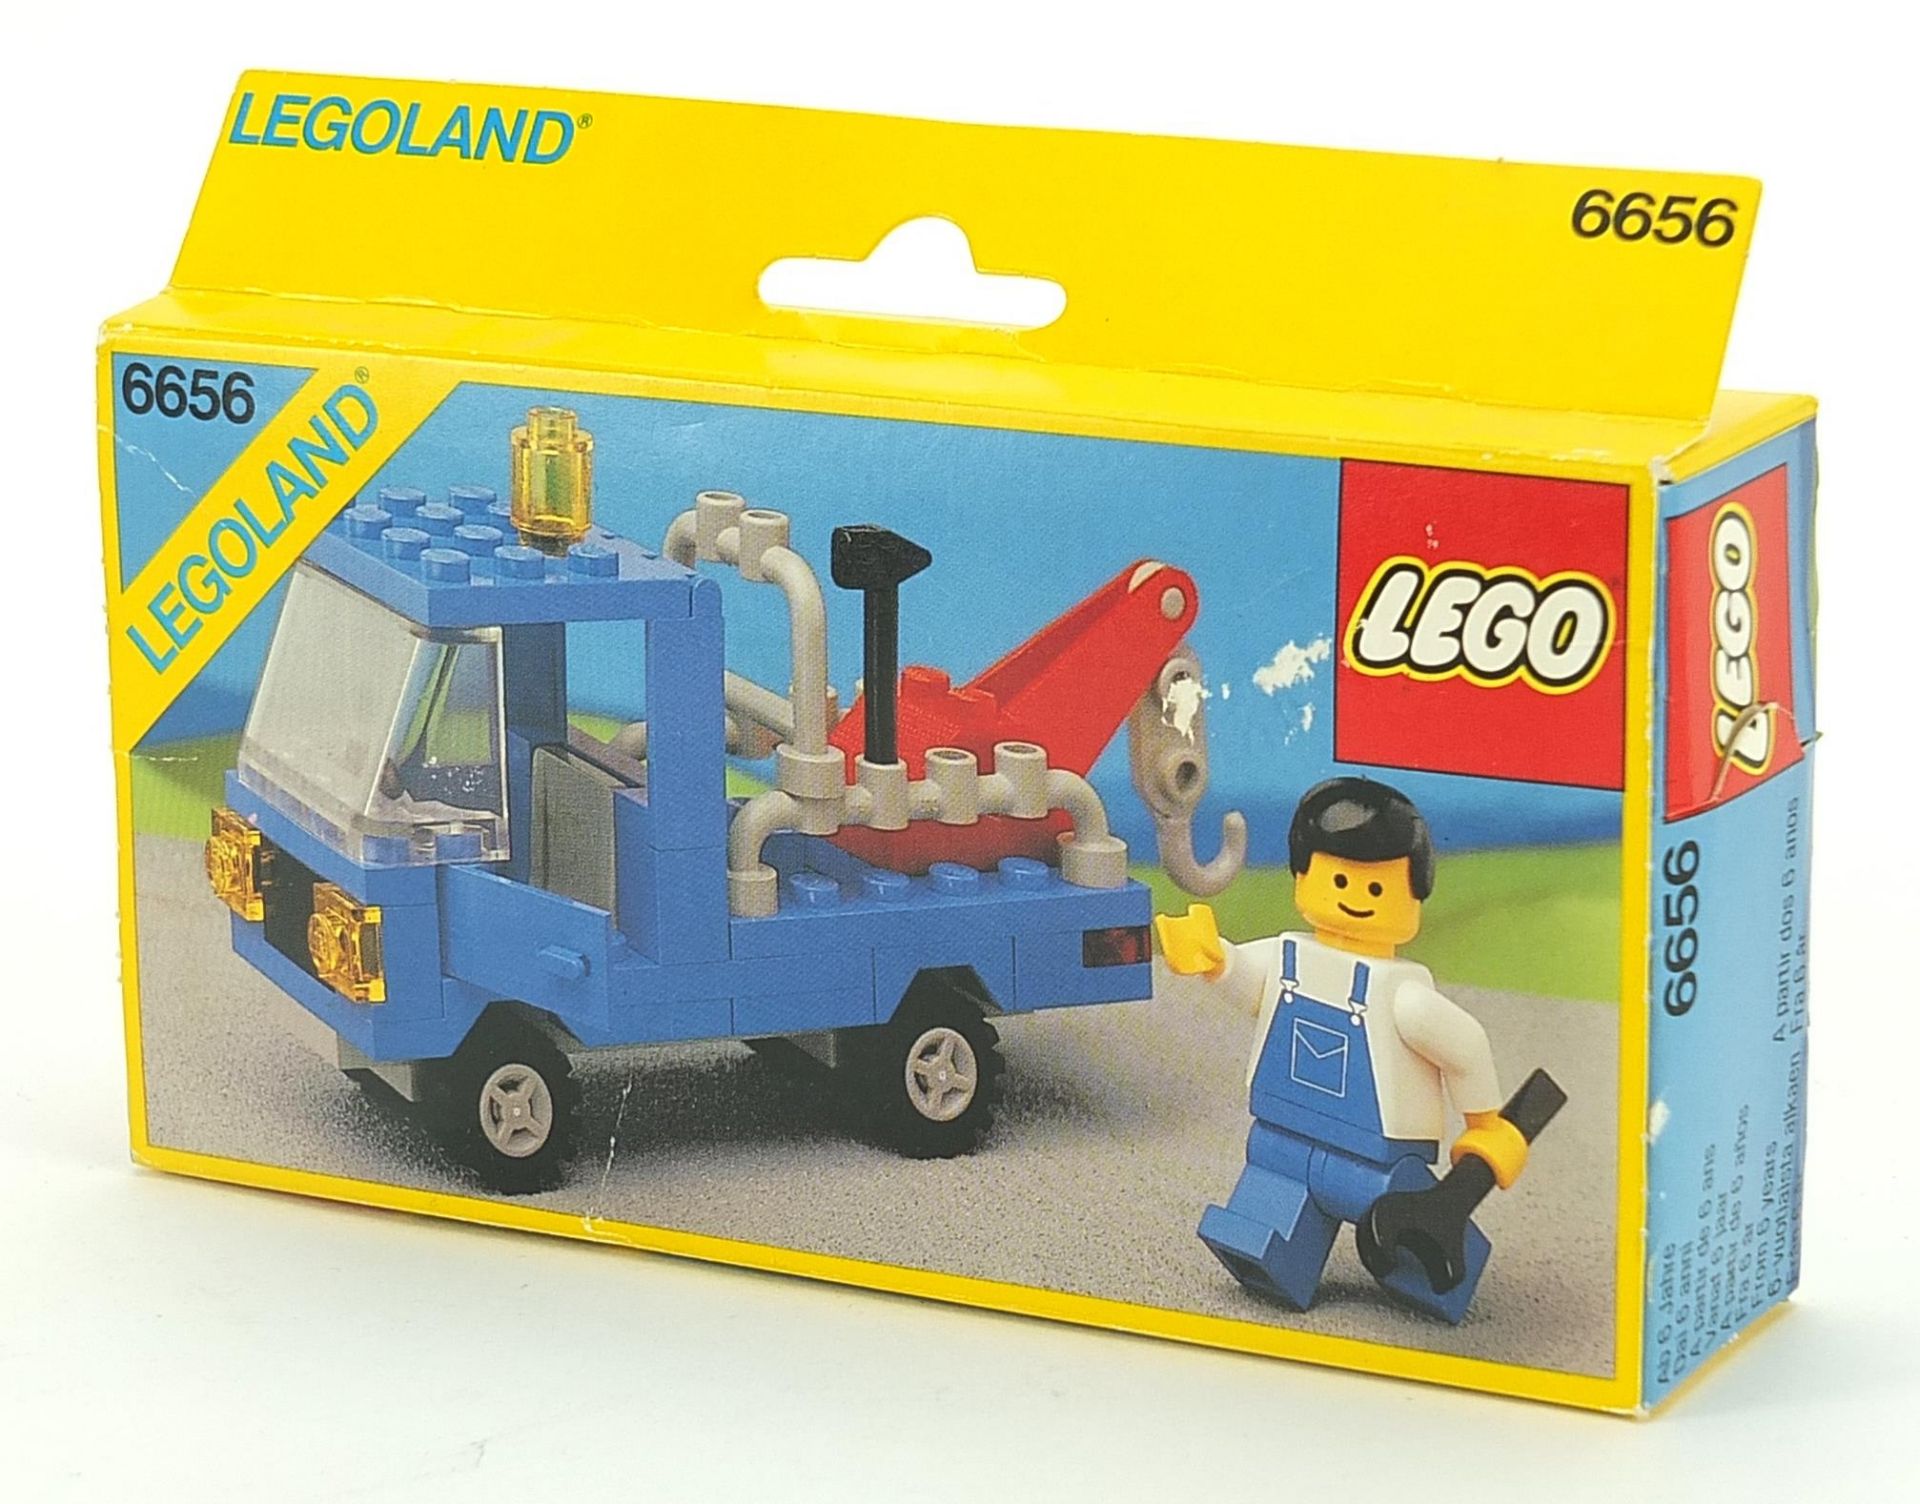 Vintage Lego break down truck with box, 6656